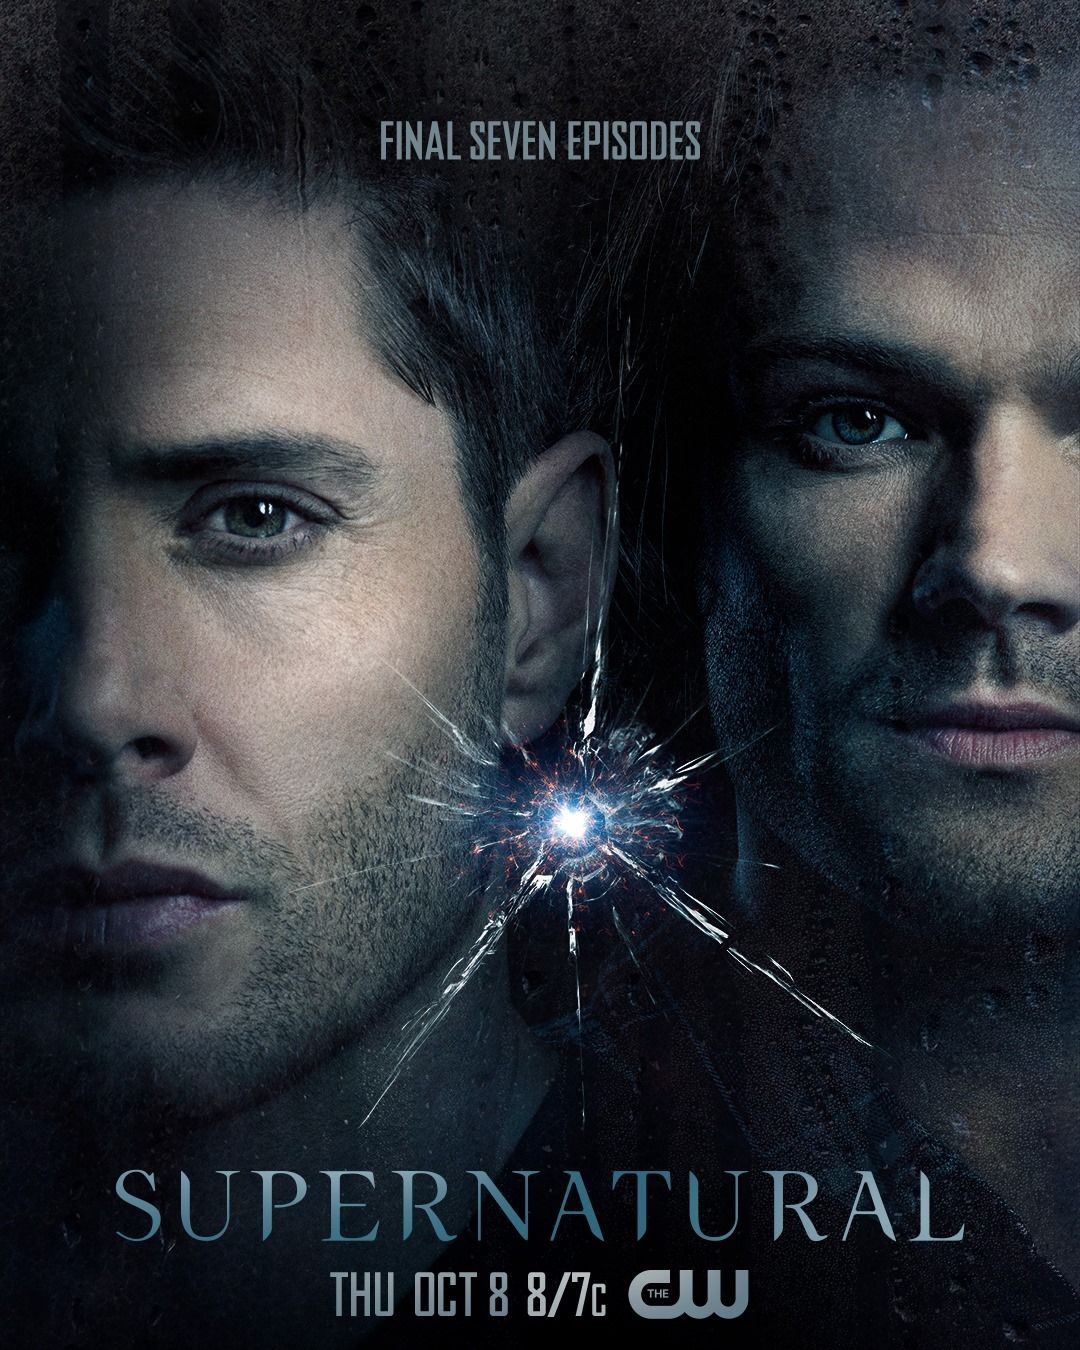 Supernatural Season 15 Poster 1: Extra Large Poster Image